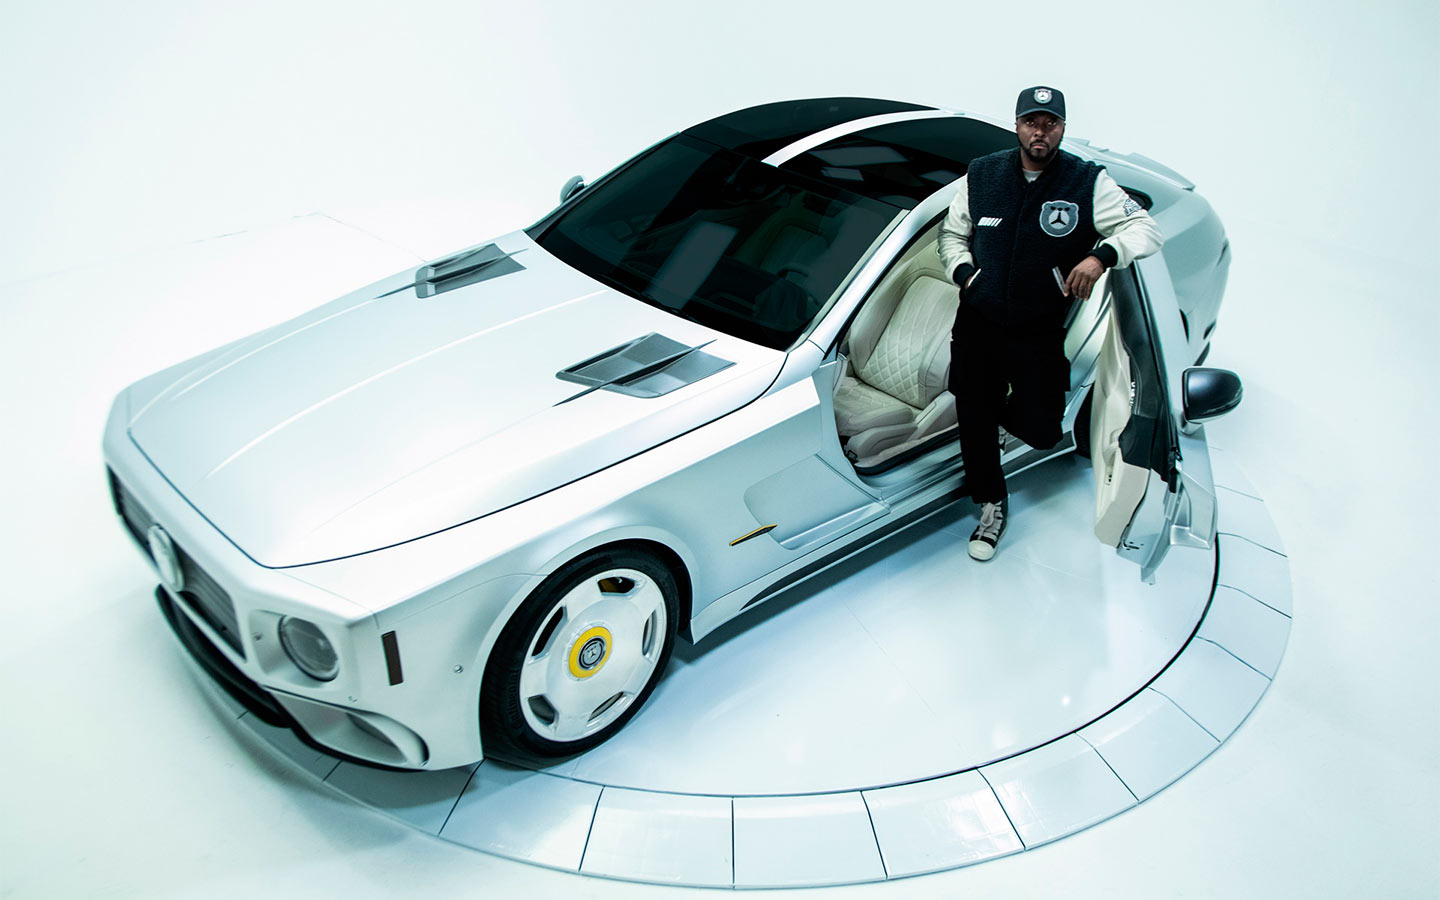 Mercedes и рэп-звезда разработали уникальное купе с внешностью G-Class